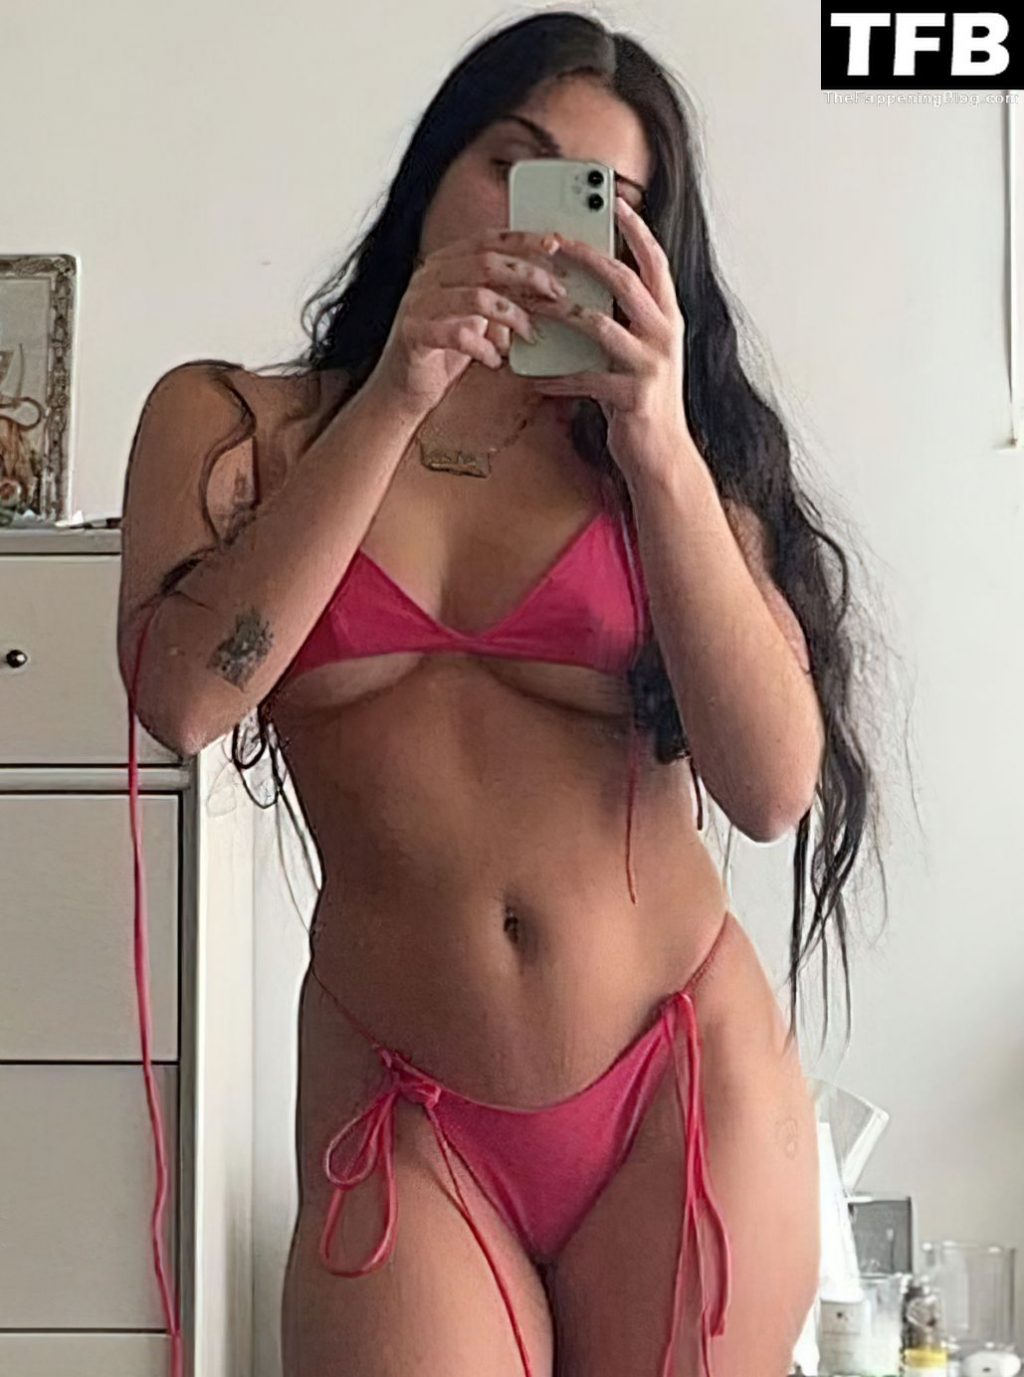 Lourdes Leon Shows Off Her Sexy Tits in a Bikini (2 Photos)